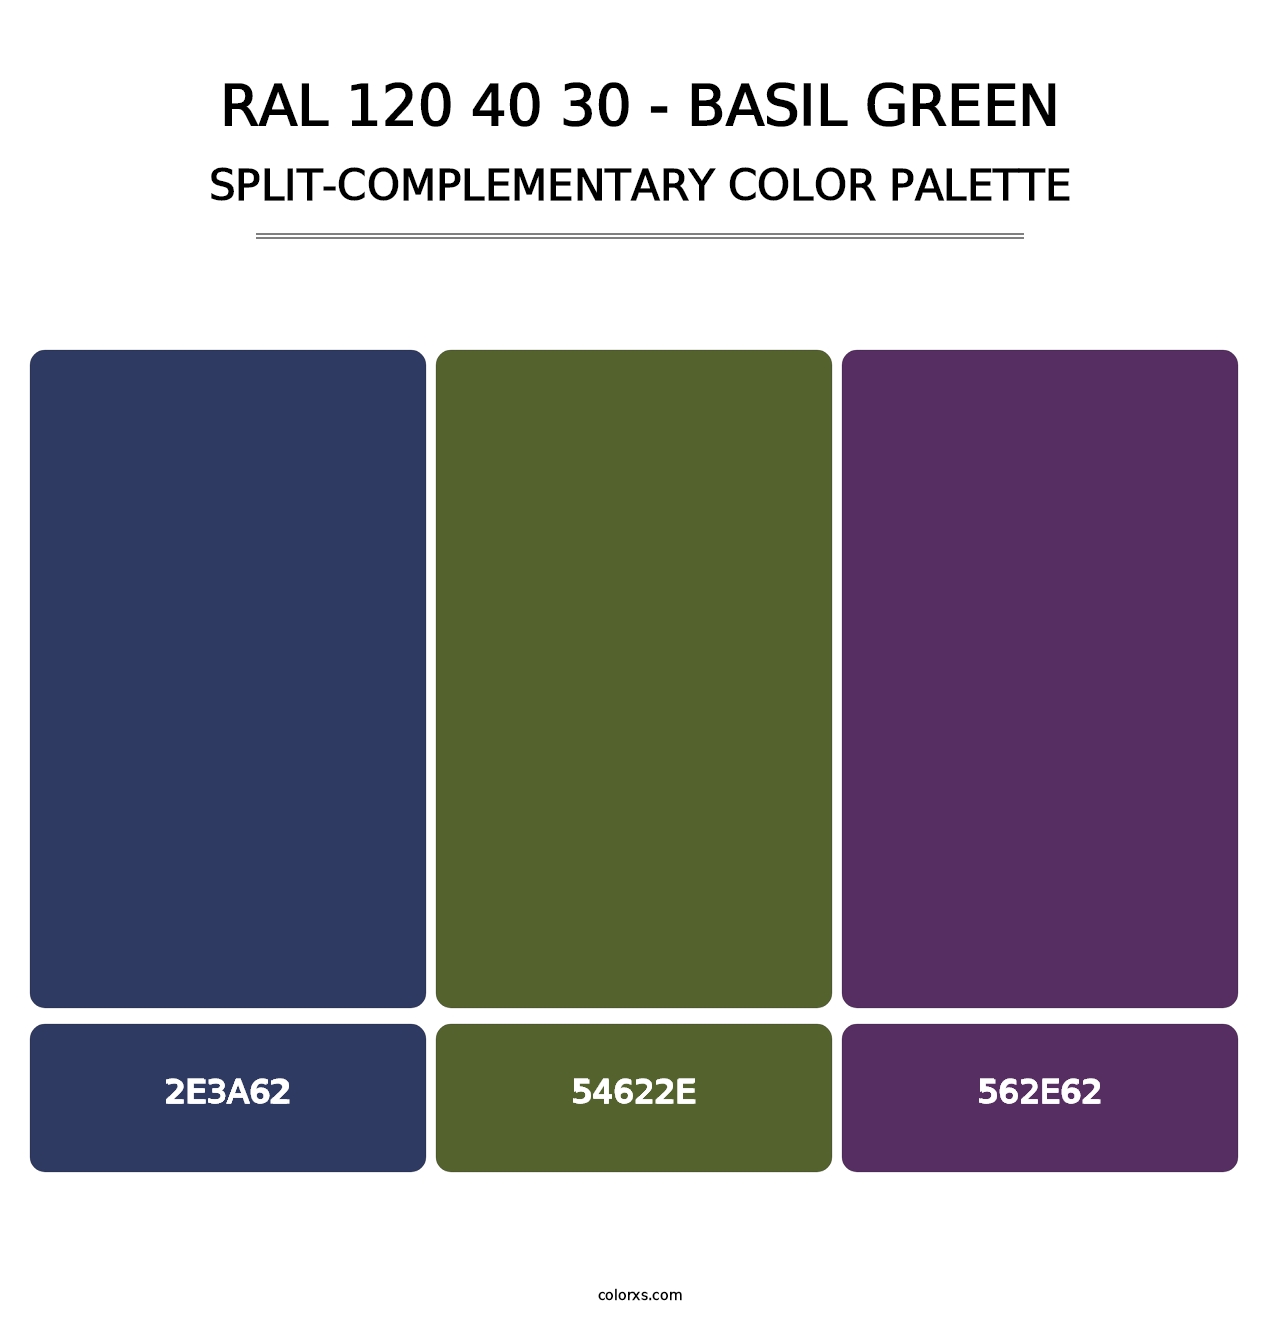 RAL 120 40 30 - Basil Green - Split-Complementary Color Palette